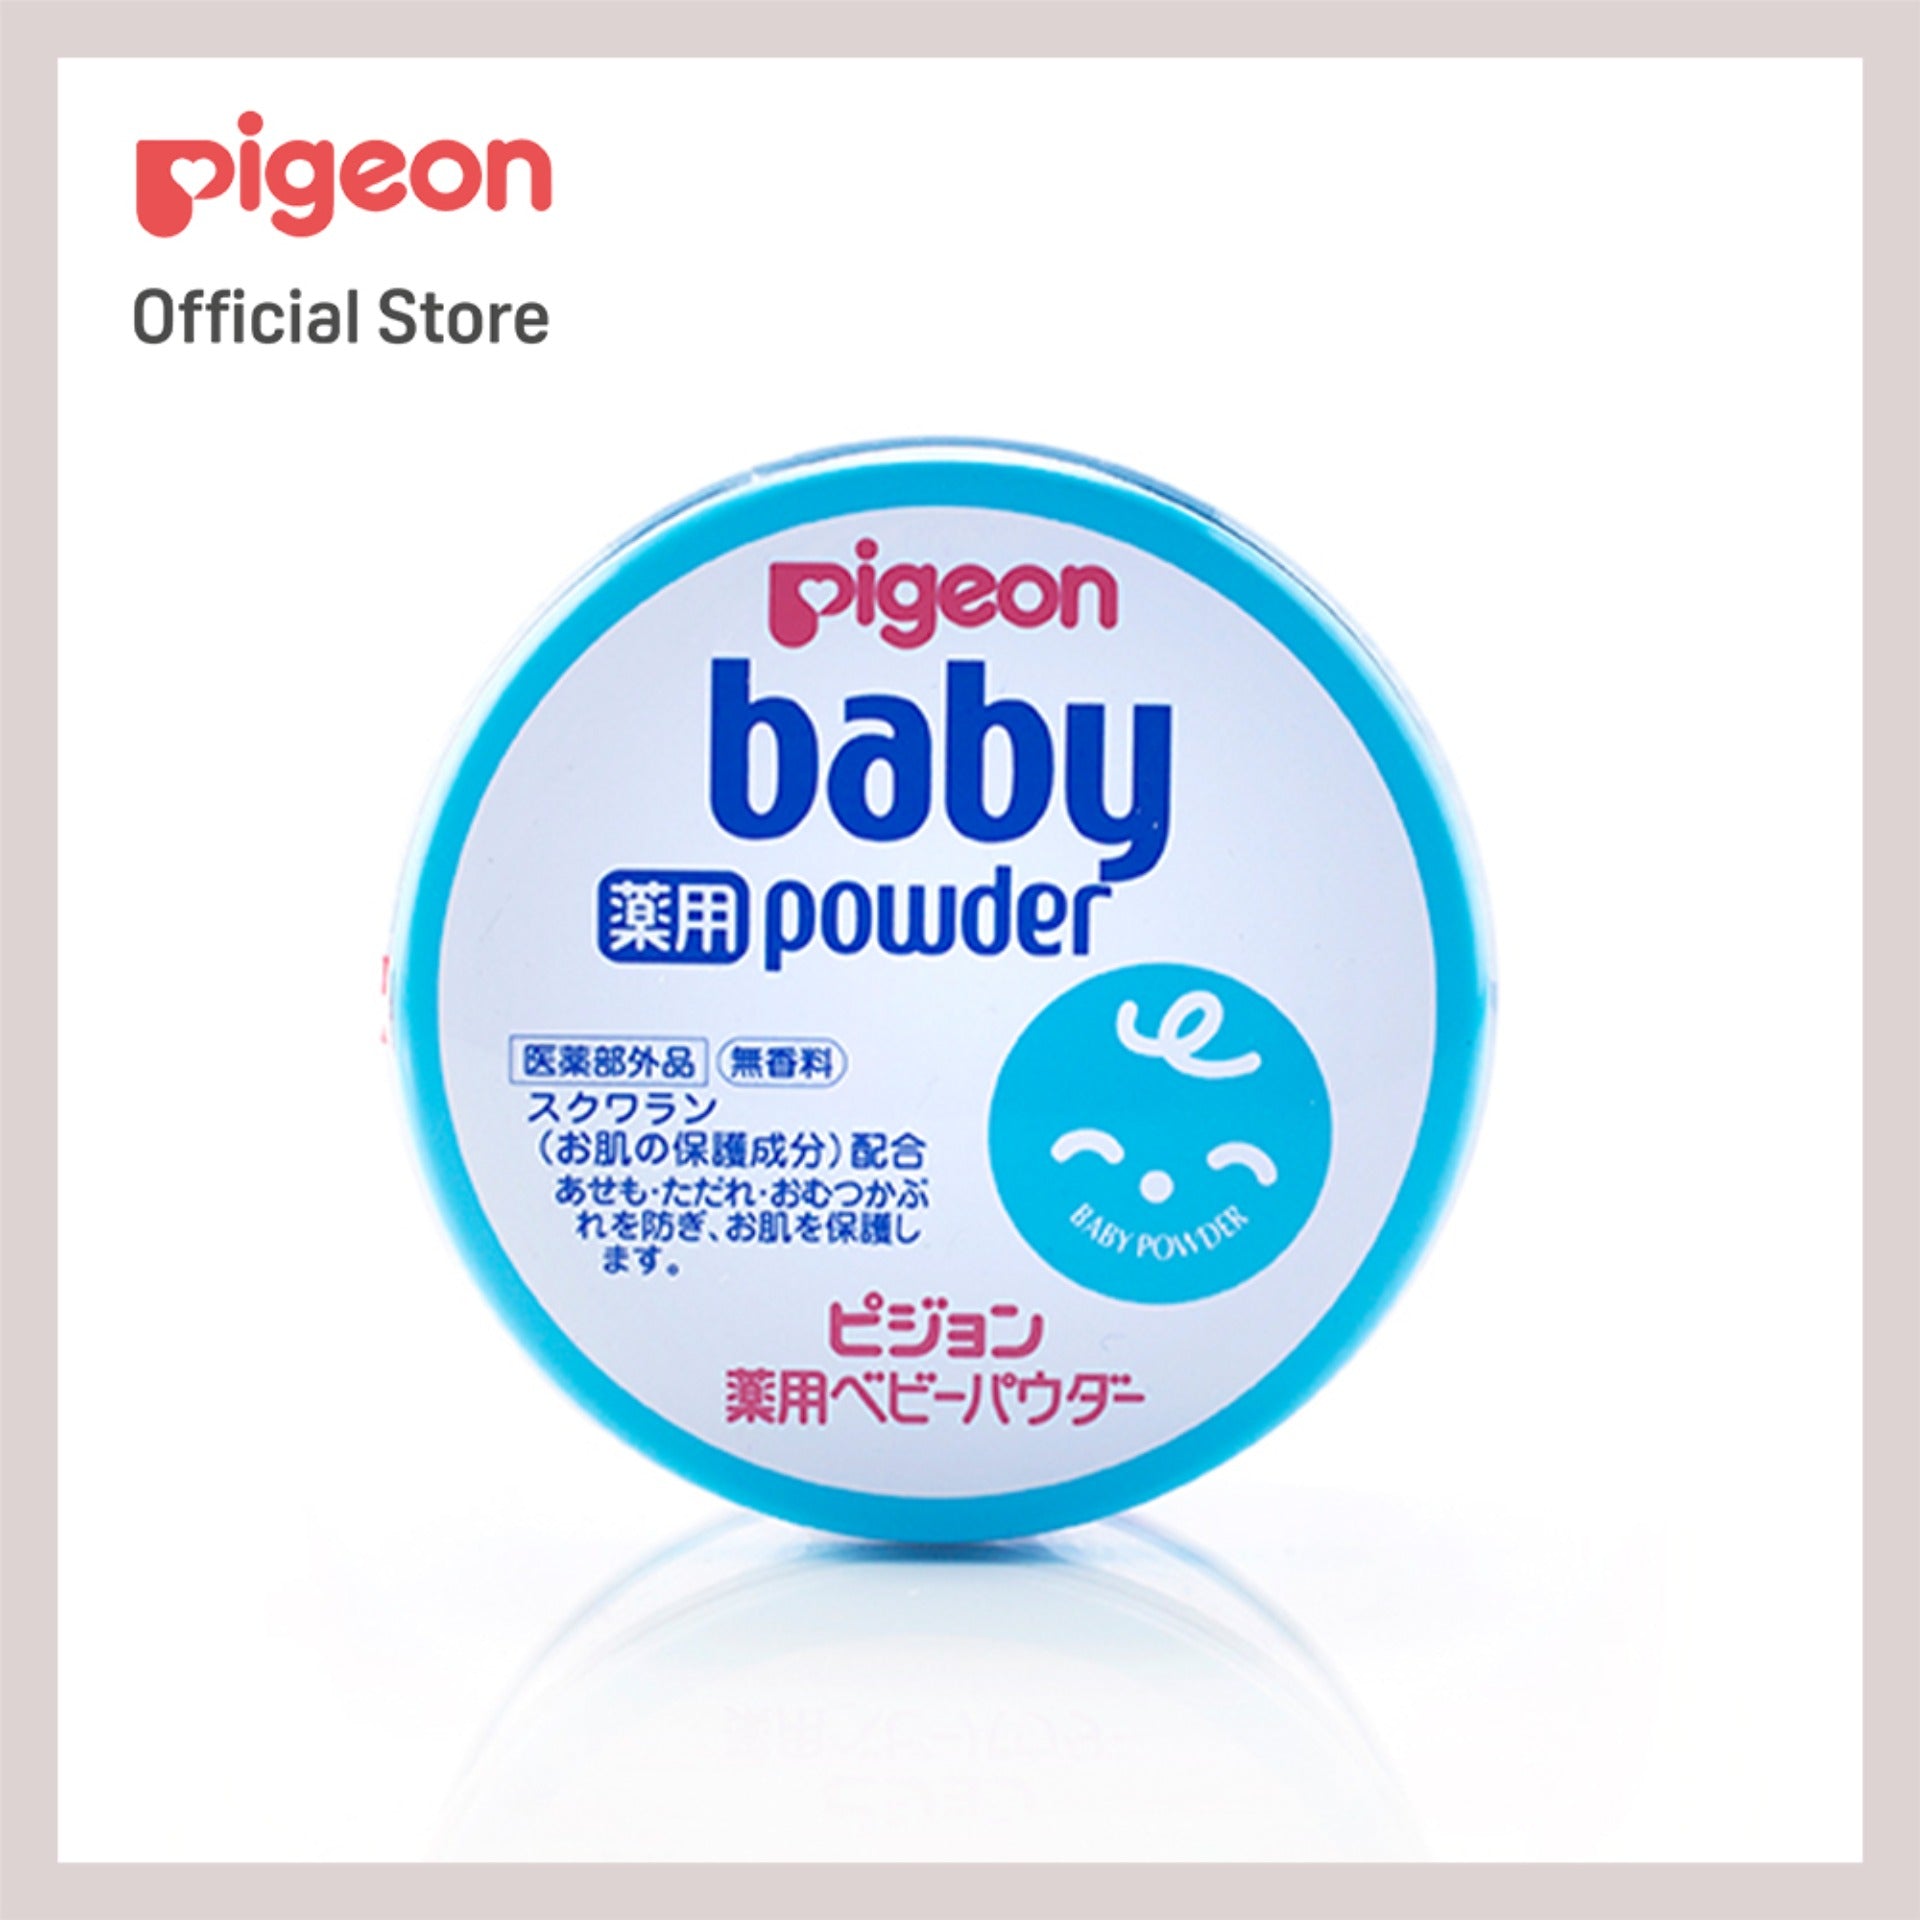 Pigeon Medicated Powder Cake 45G (Japan) | Little Baby.